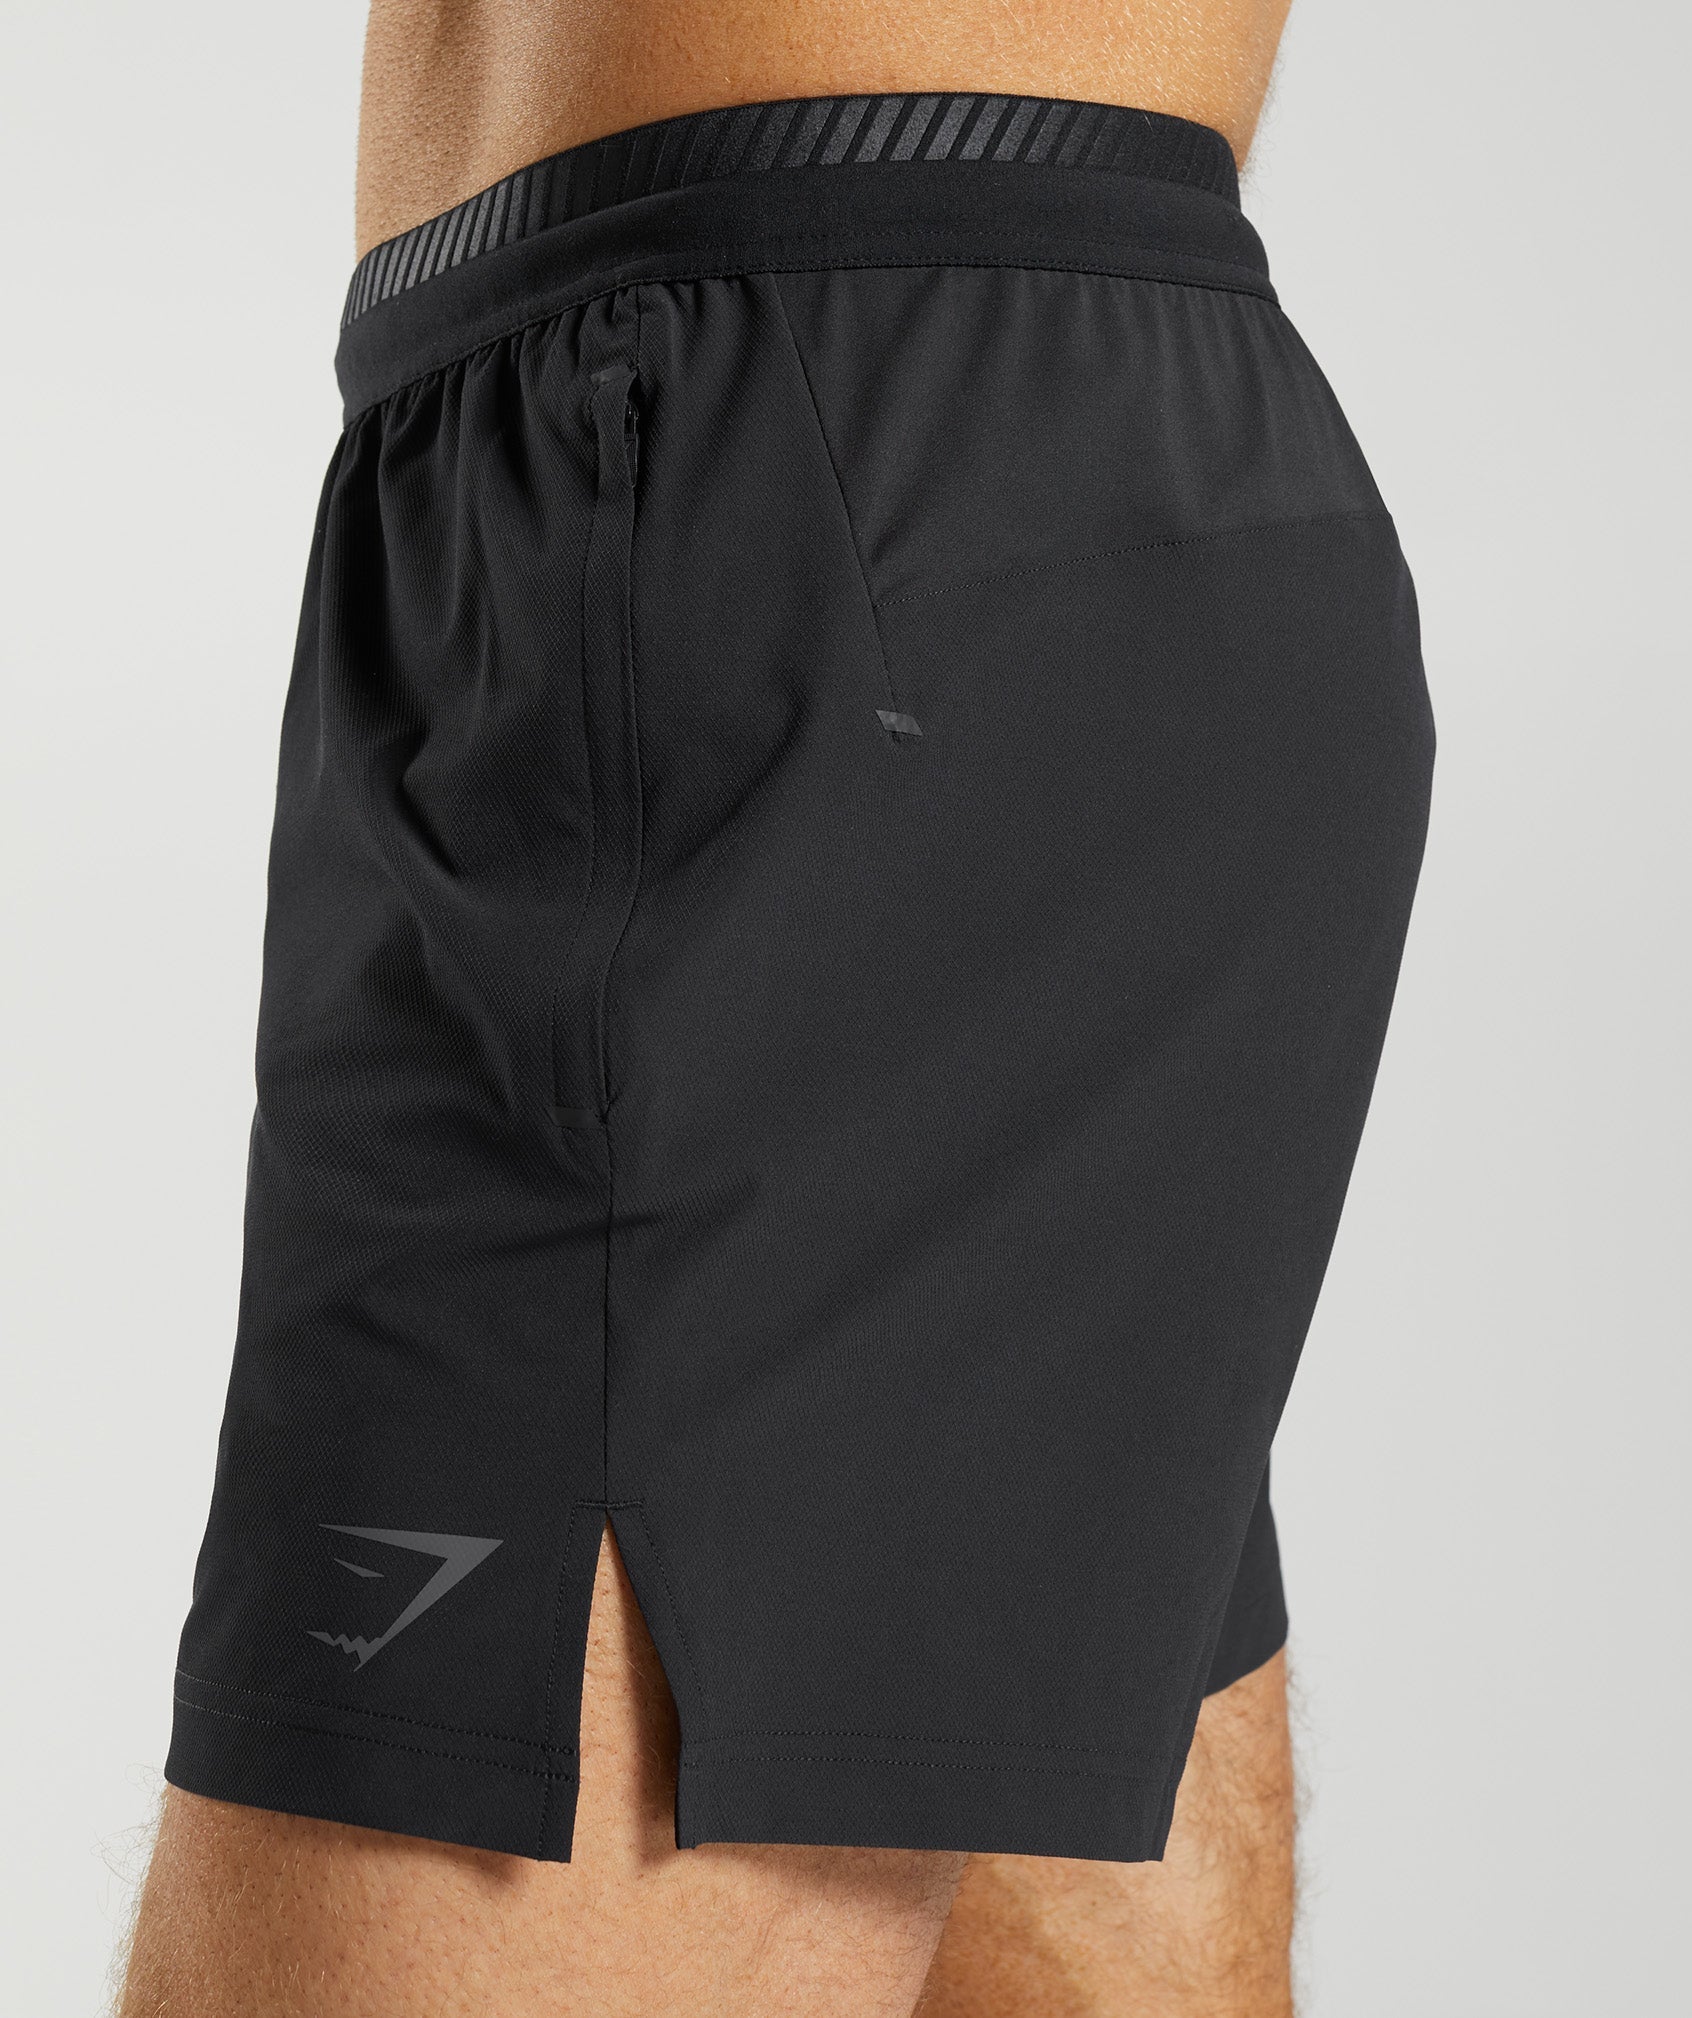 Apex 5" Hybrid Shorts in Black